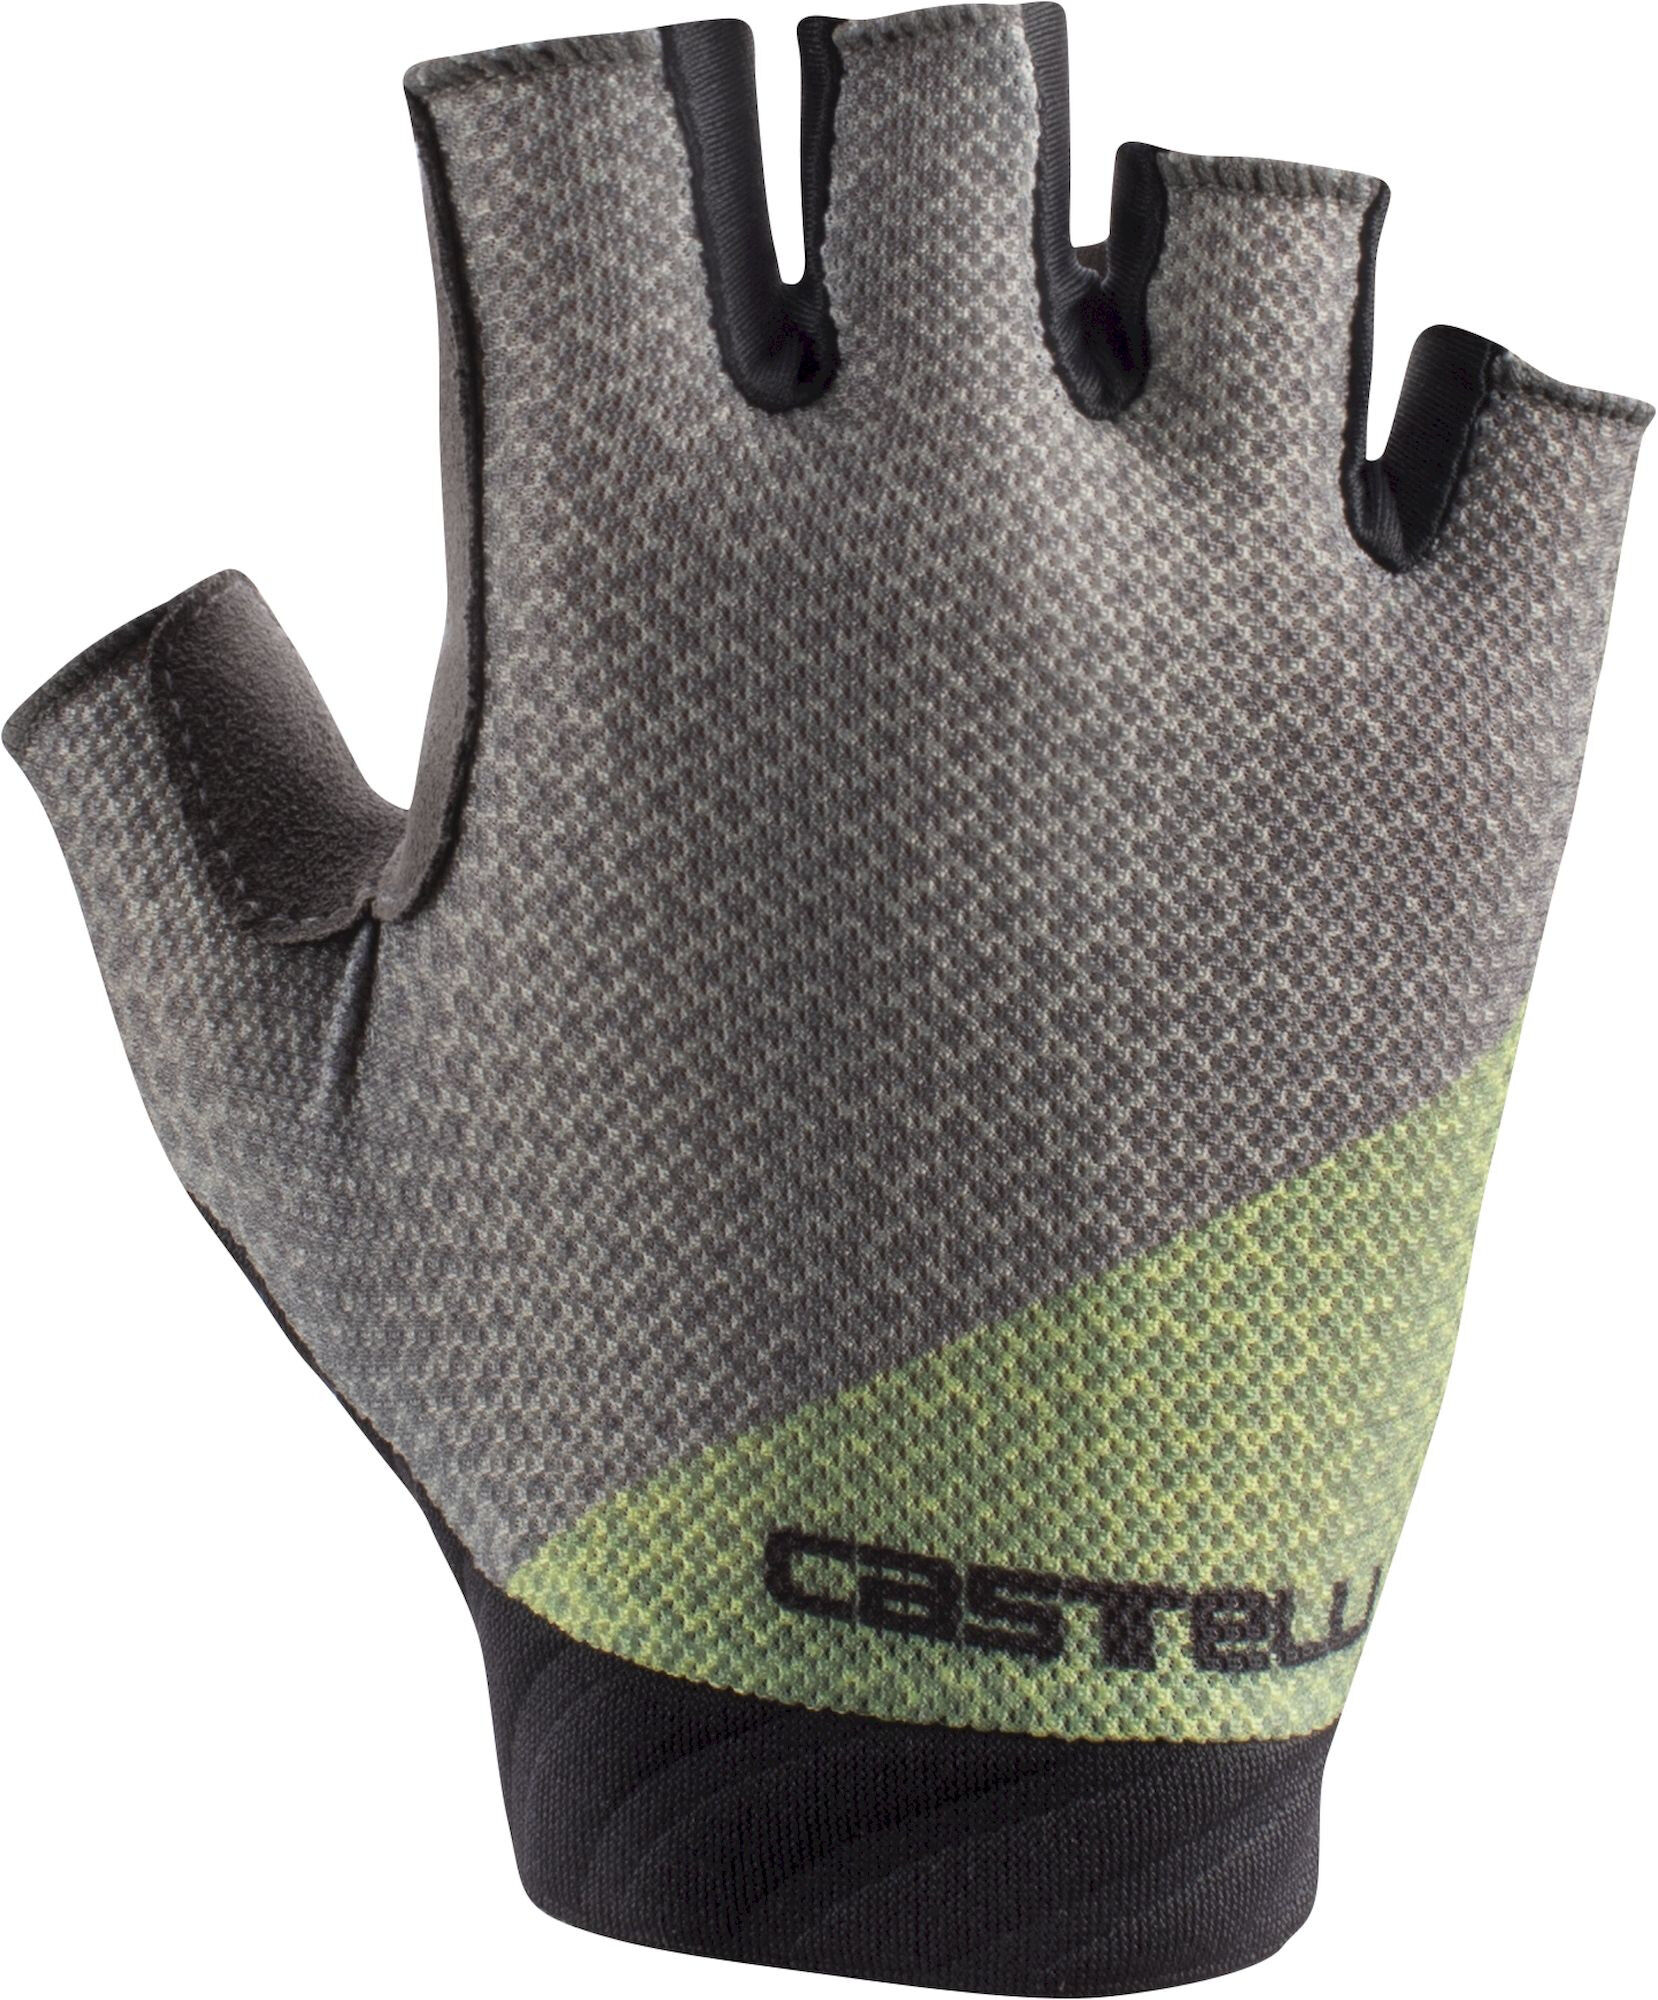 Castelli Roubaix Gel 2 Glove - Cycling gloves - Women's